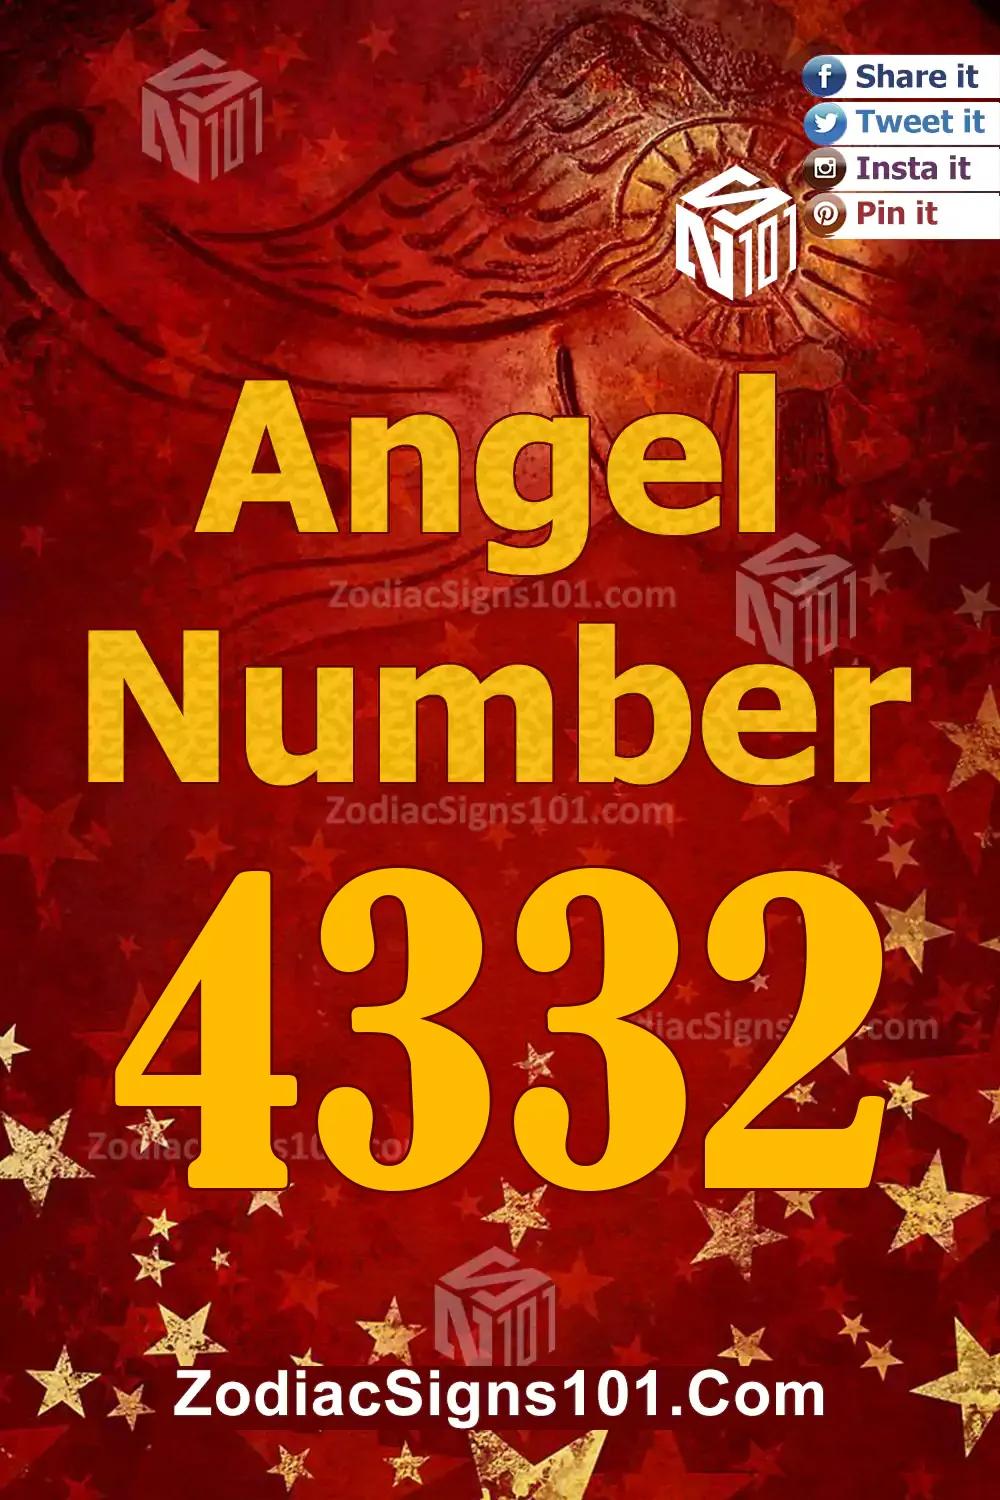 4332-Angel-Number-Meaning.jpg